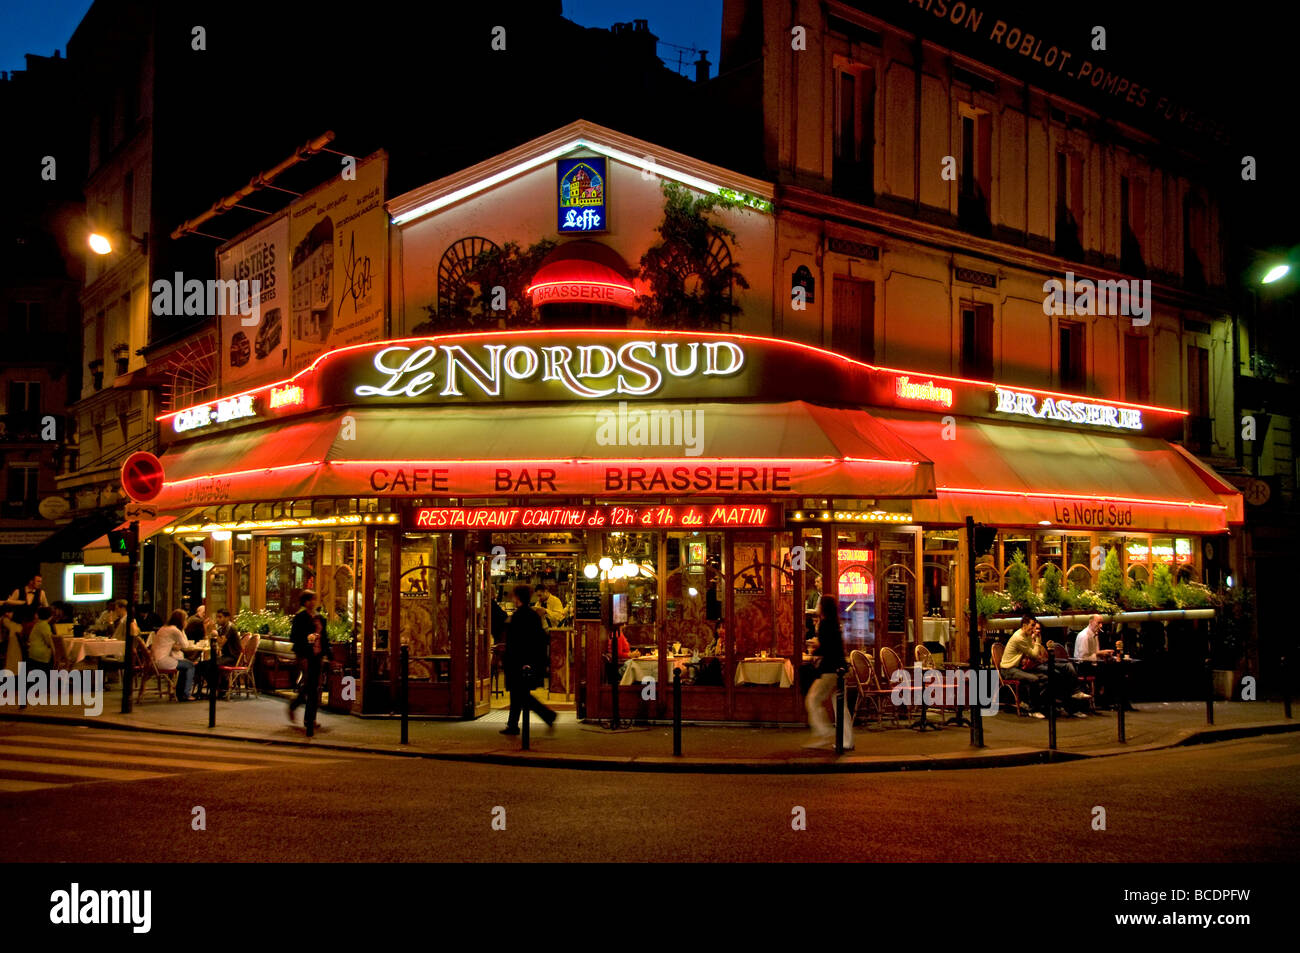 Le Nord Sud Paris France French Restaurant Cafe Bar Pub Food Stock Photo